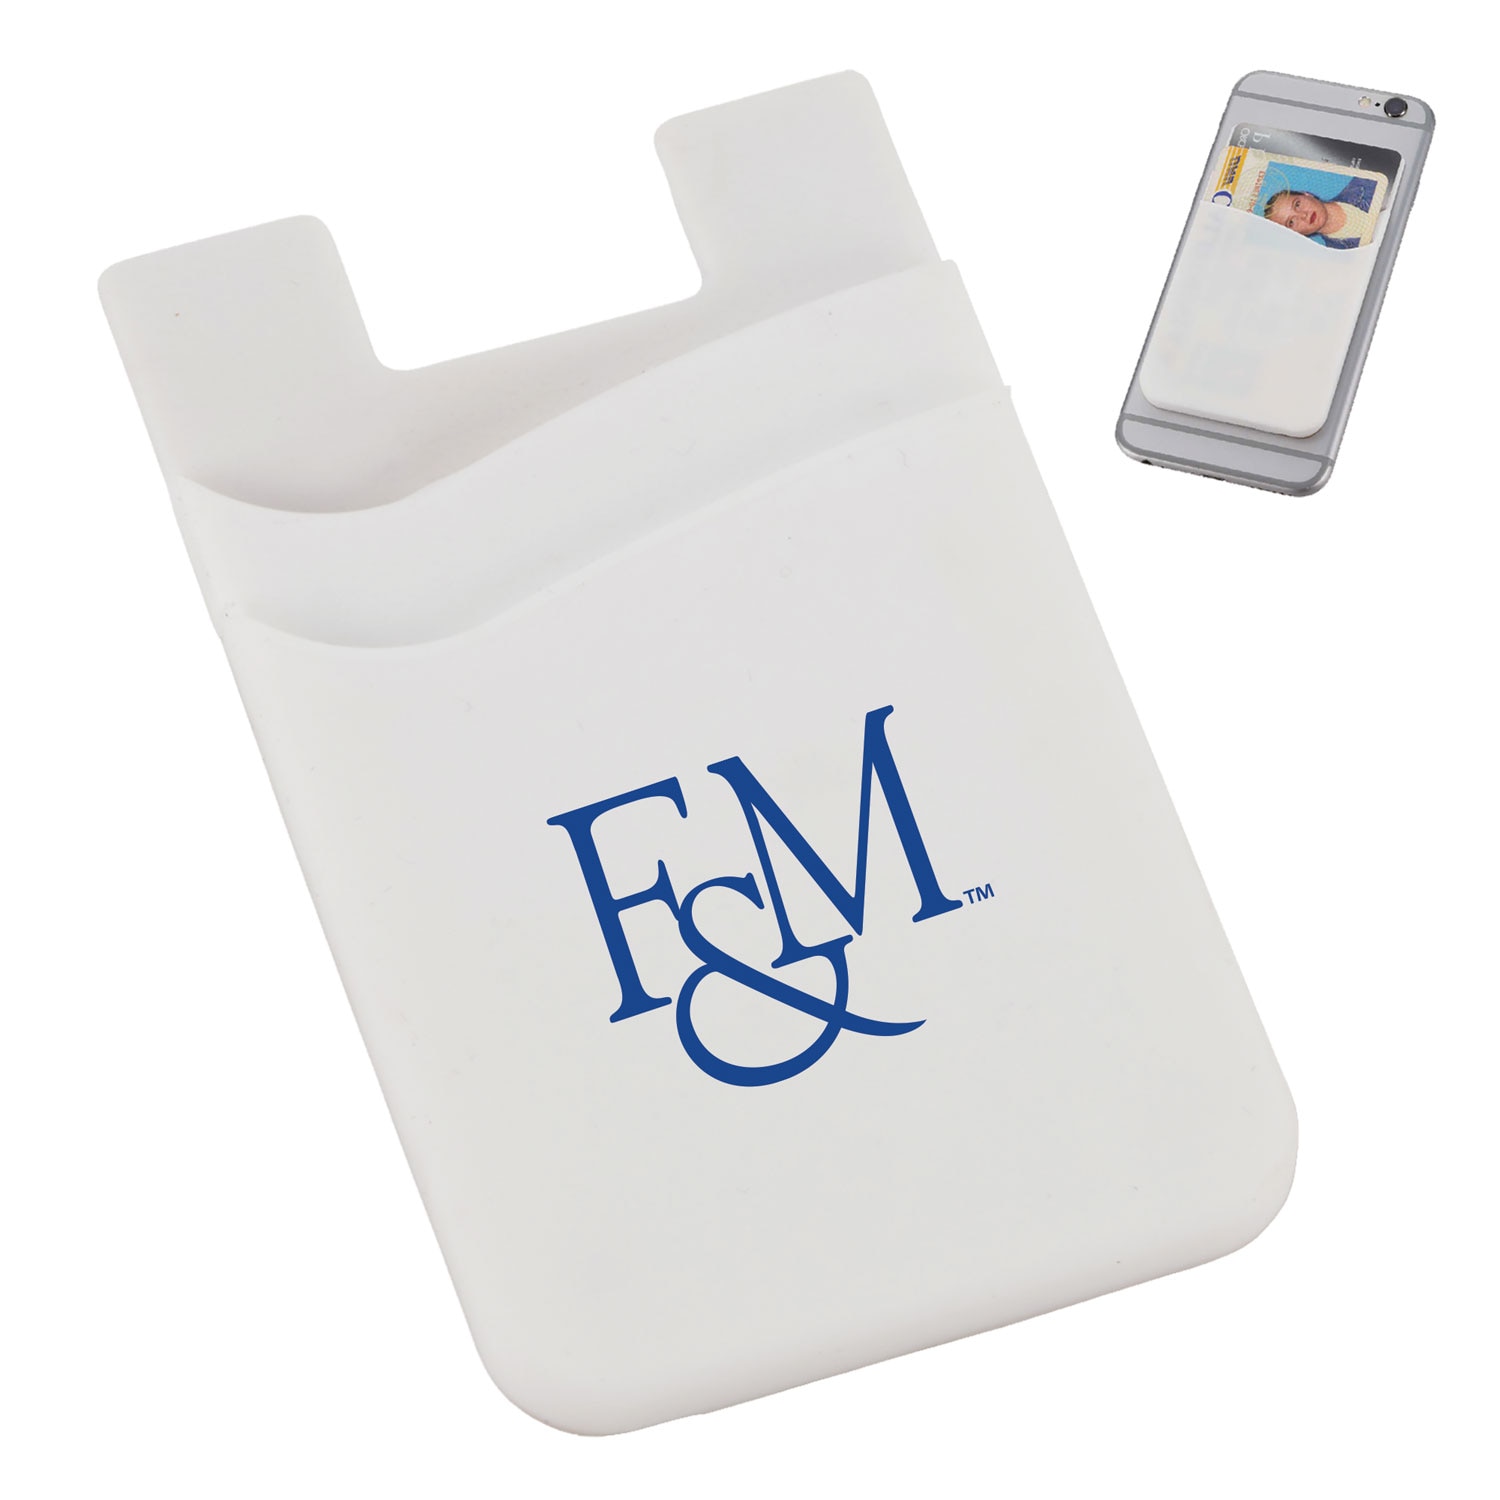 Franklin & Marshall Dual Pocket Phone Wallet